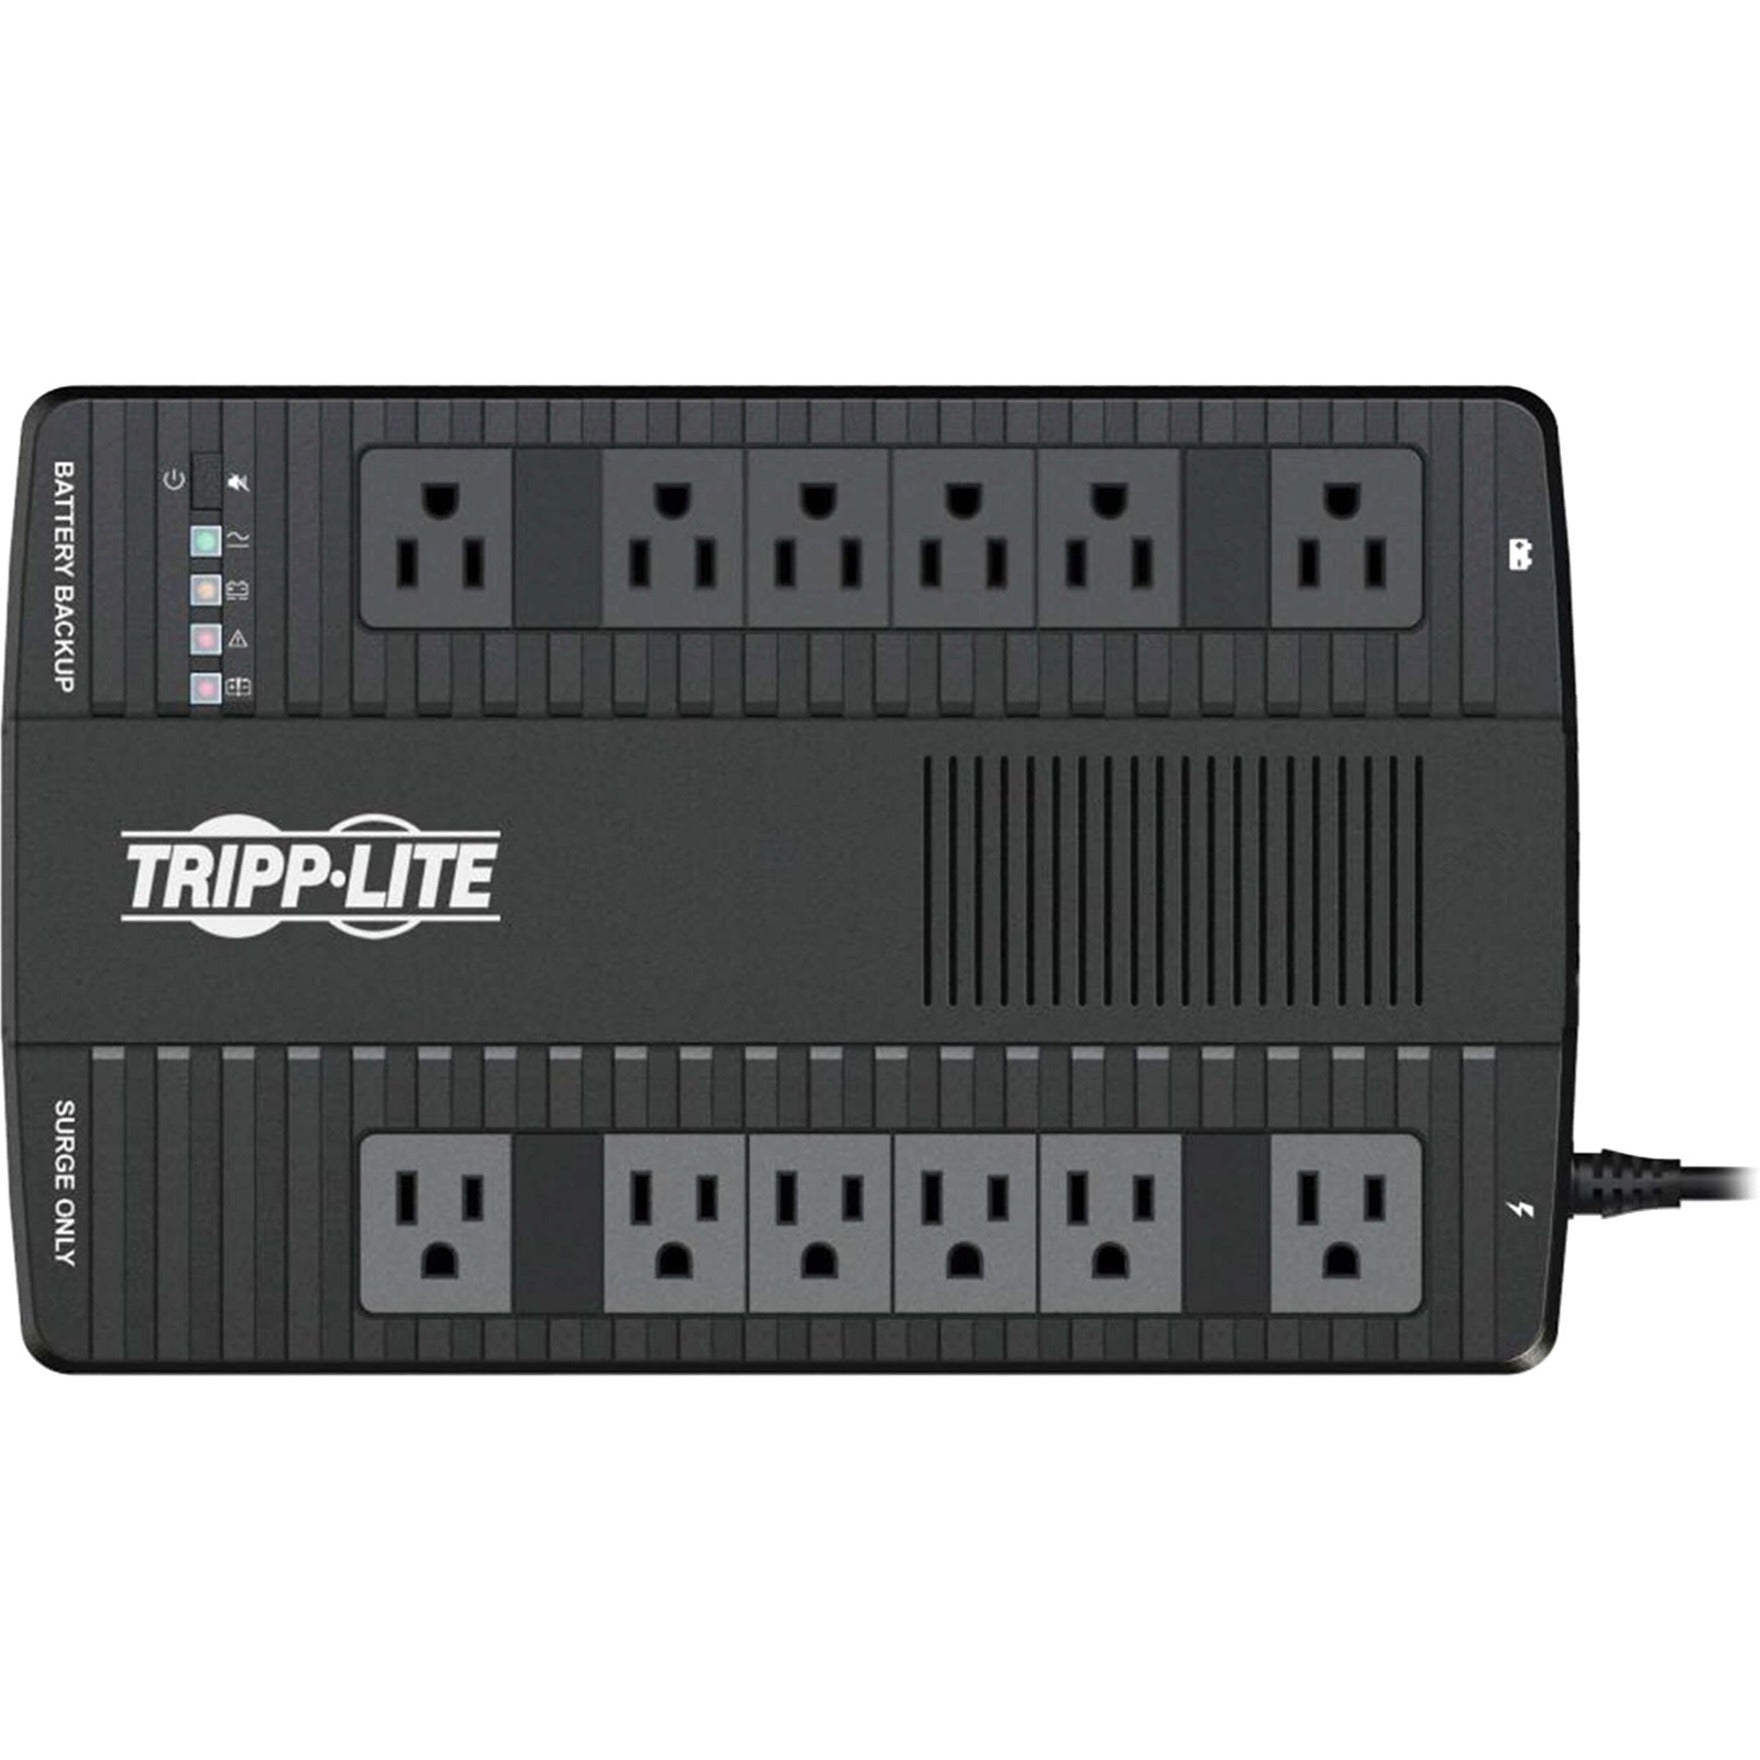 Tripp Lite OMNISMART550MX OmniSmart 550VA Ultra-compact Desktop/Tower/Wall Mount UPS, 2 Year Warranty, Pure Sine Wave, USB Port